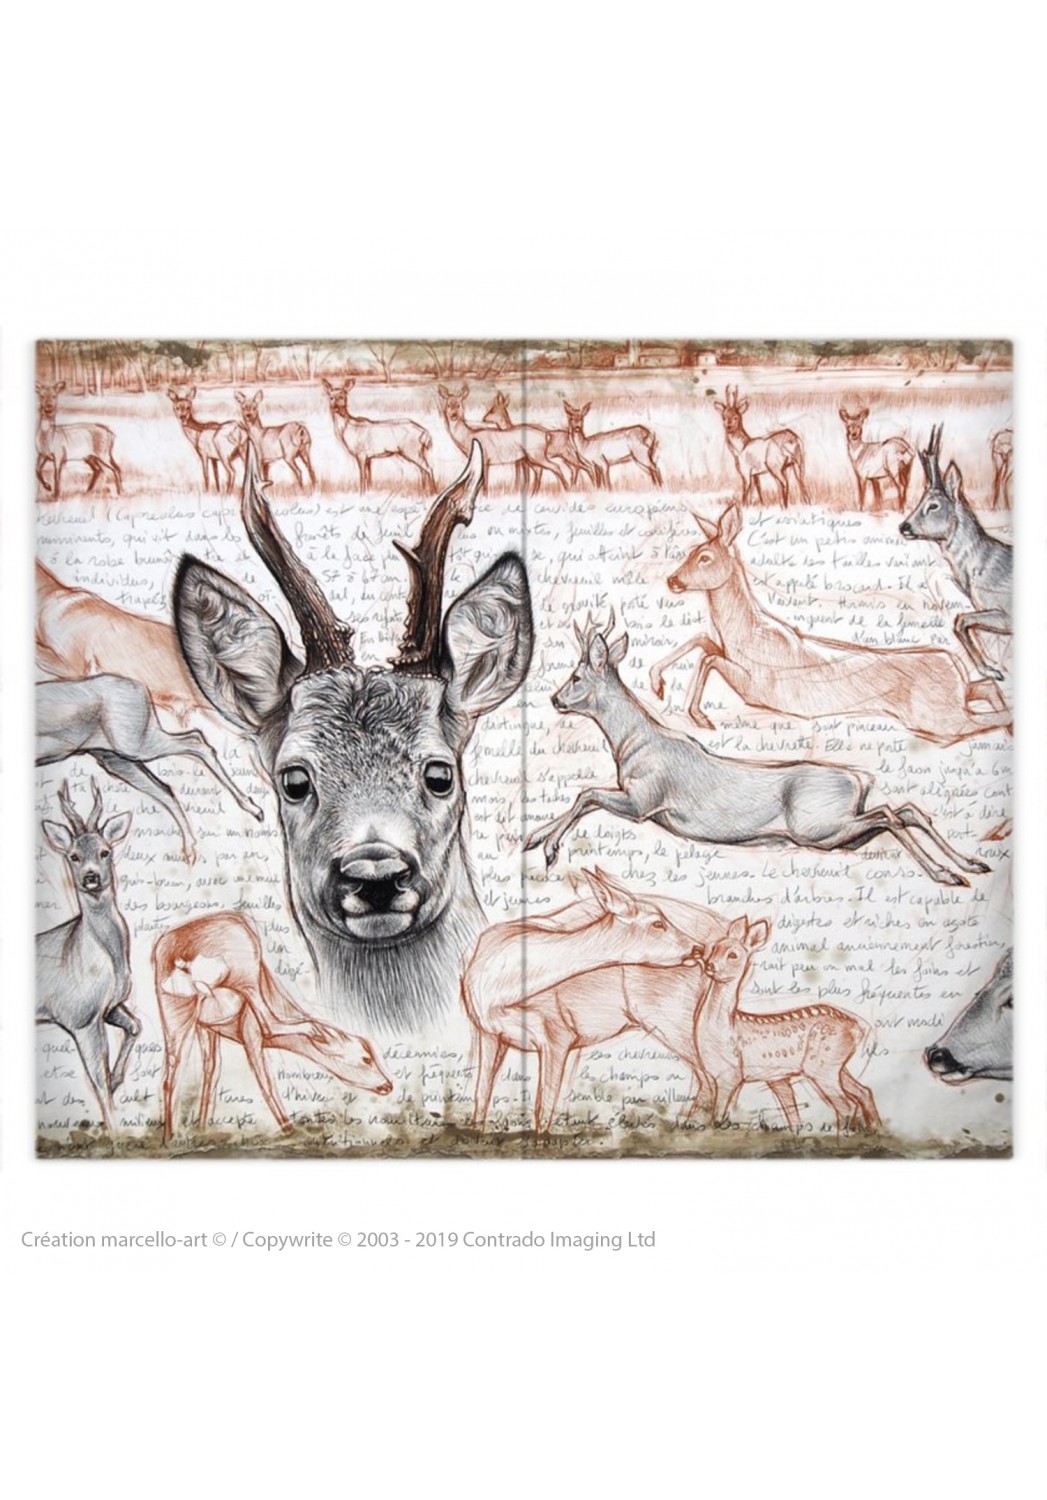 Marcello-art: Fashion accessory Duvet cover 280 roe deer